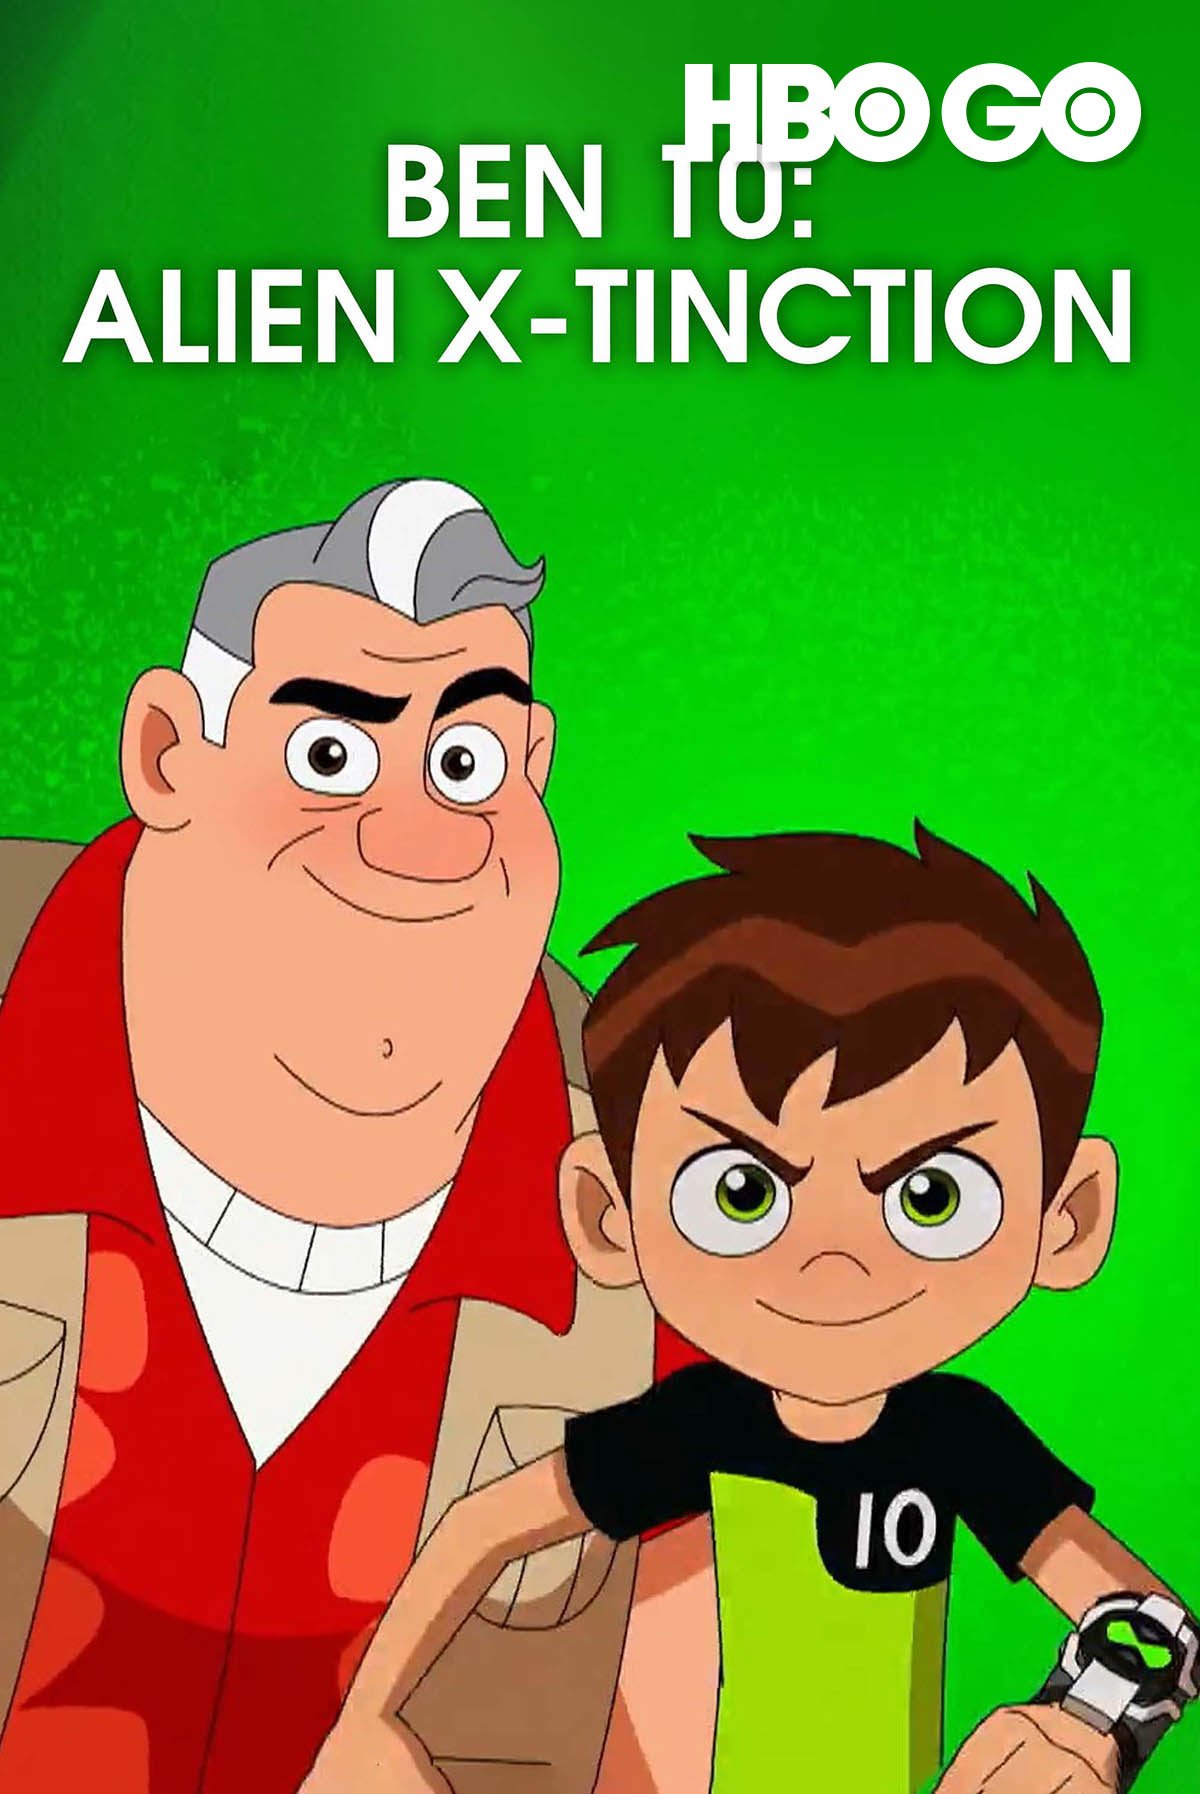 Ben 10 Alien X-tinction (TV Episode 2021) - IMDb